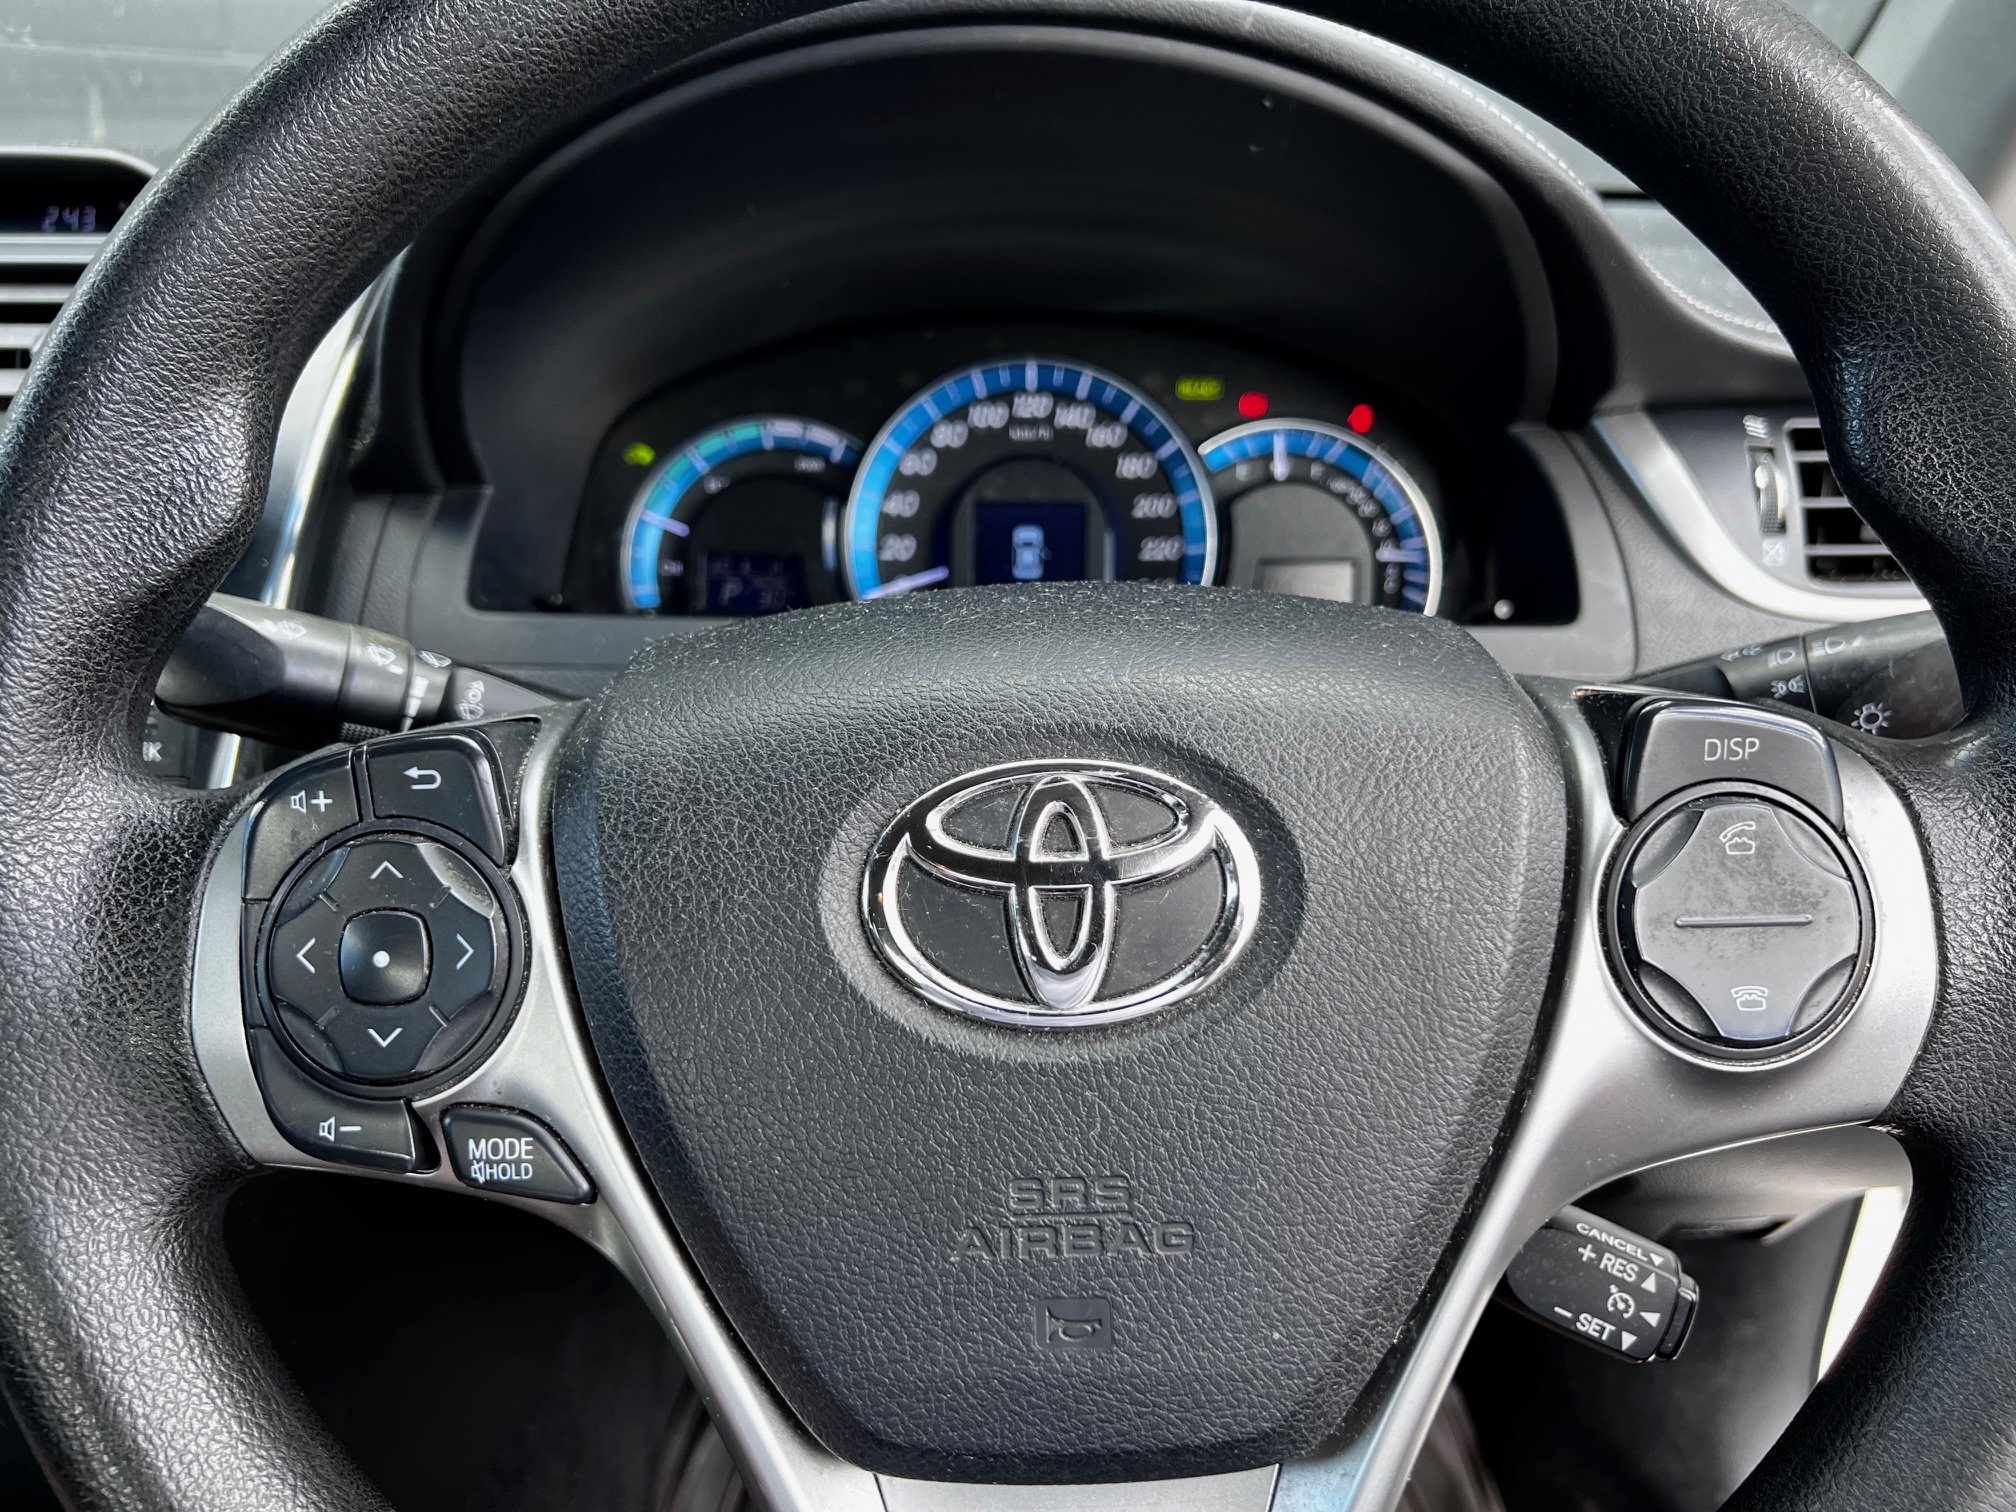 Toyota Camry 2012 Image 14